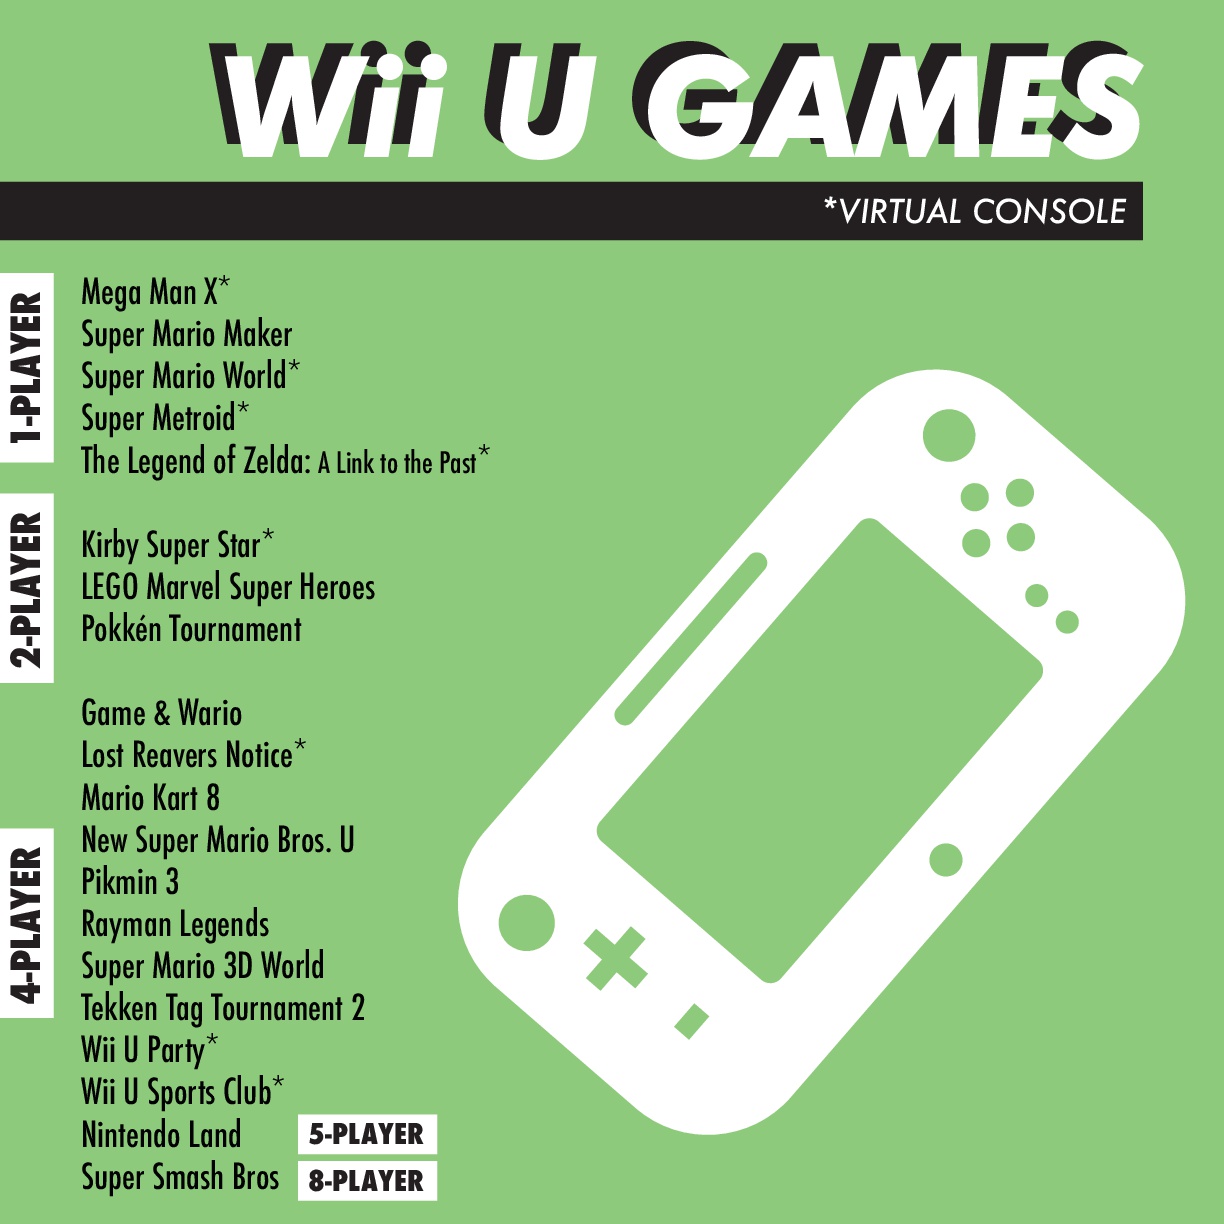 ASLC Student Life Gaming - Wii U Games